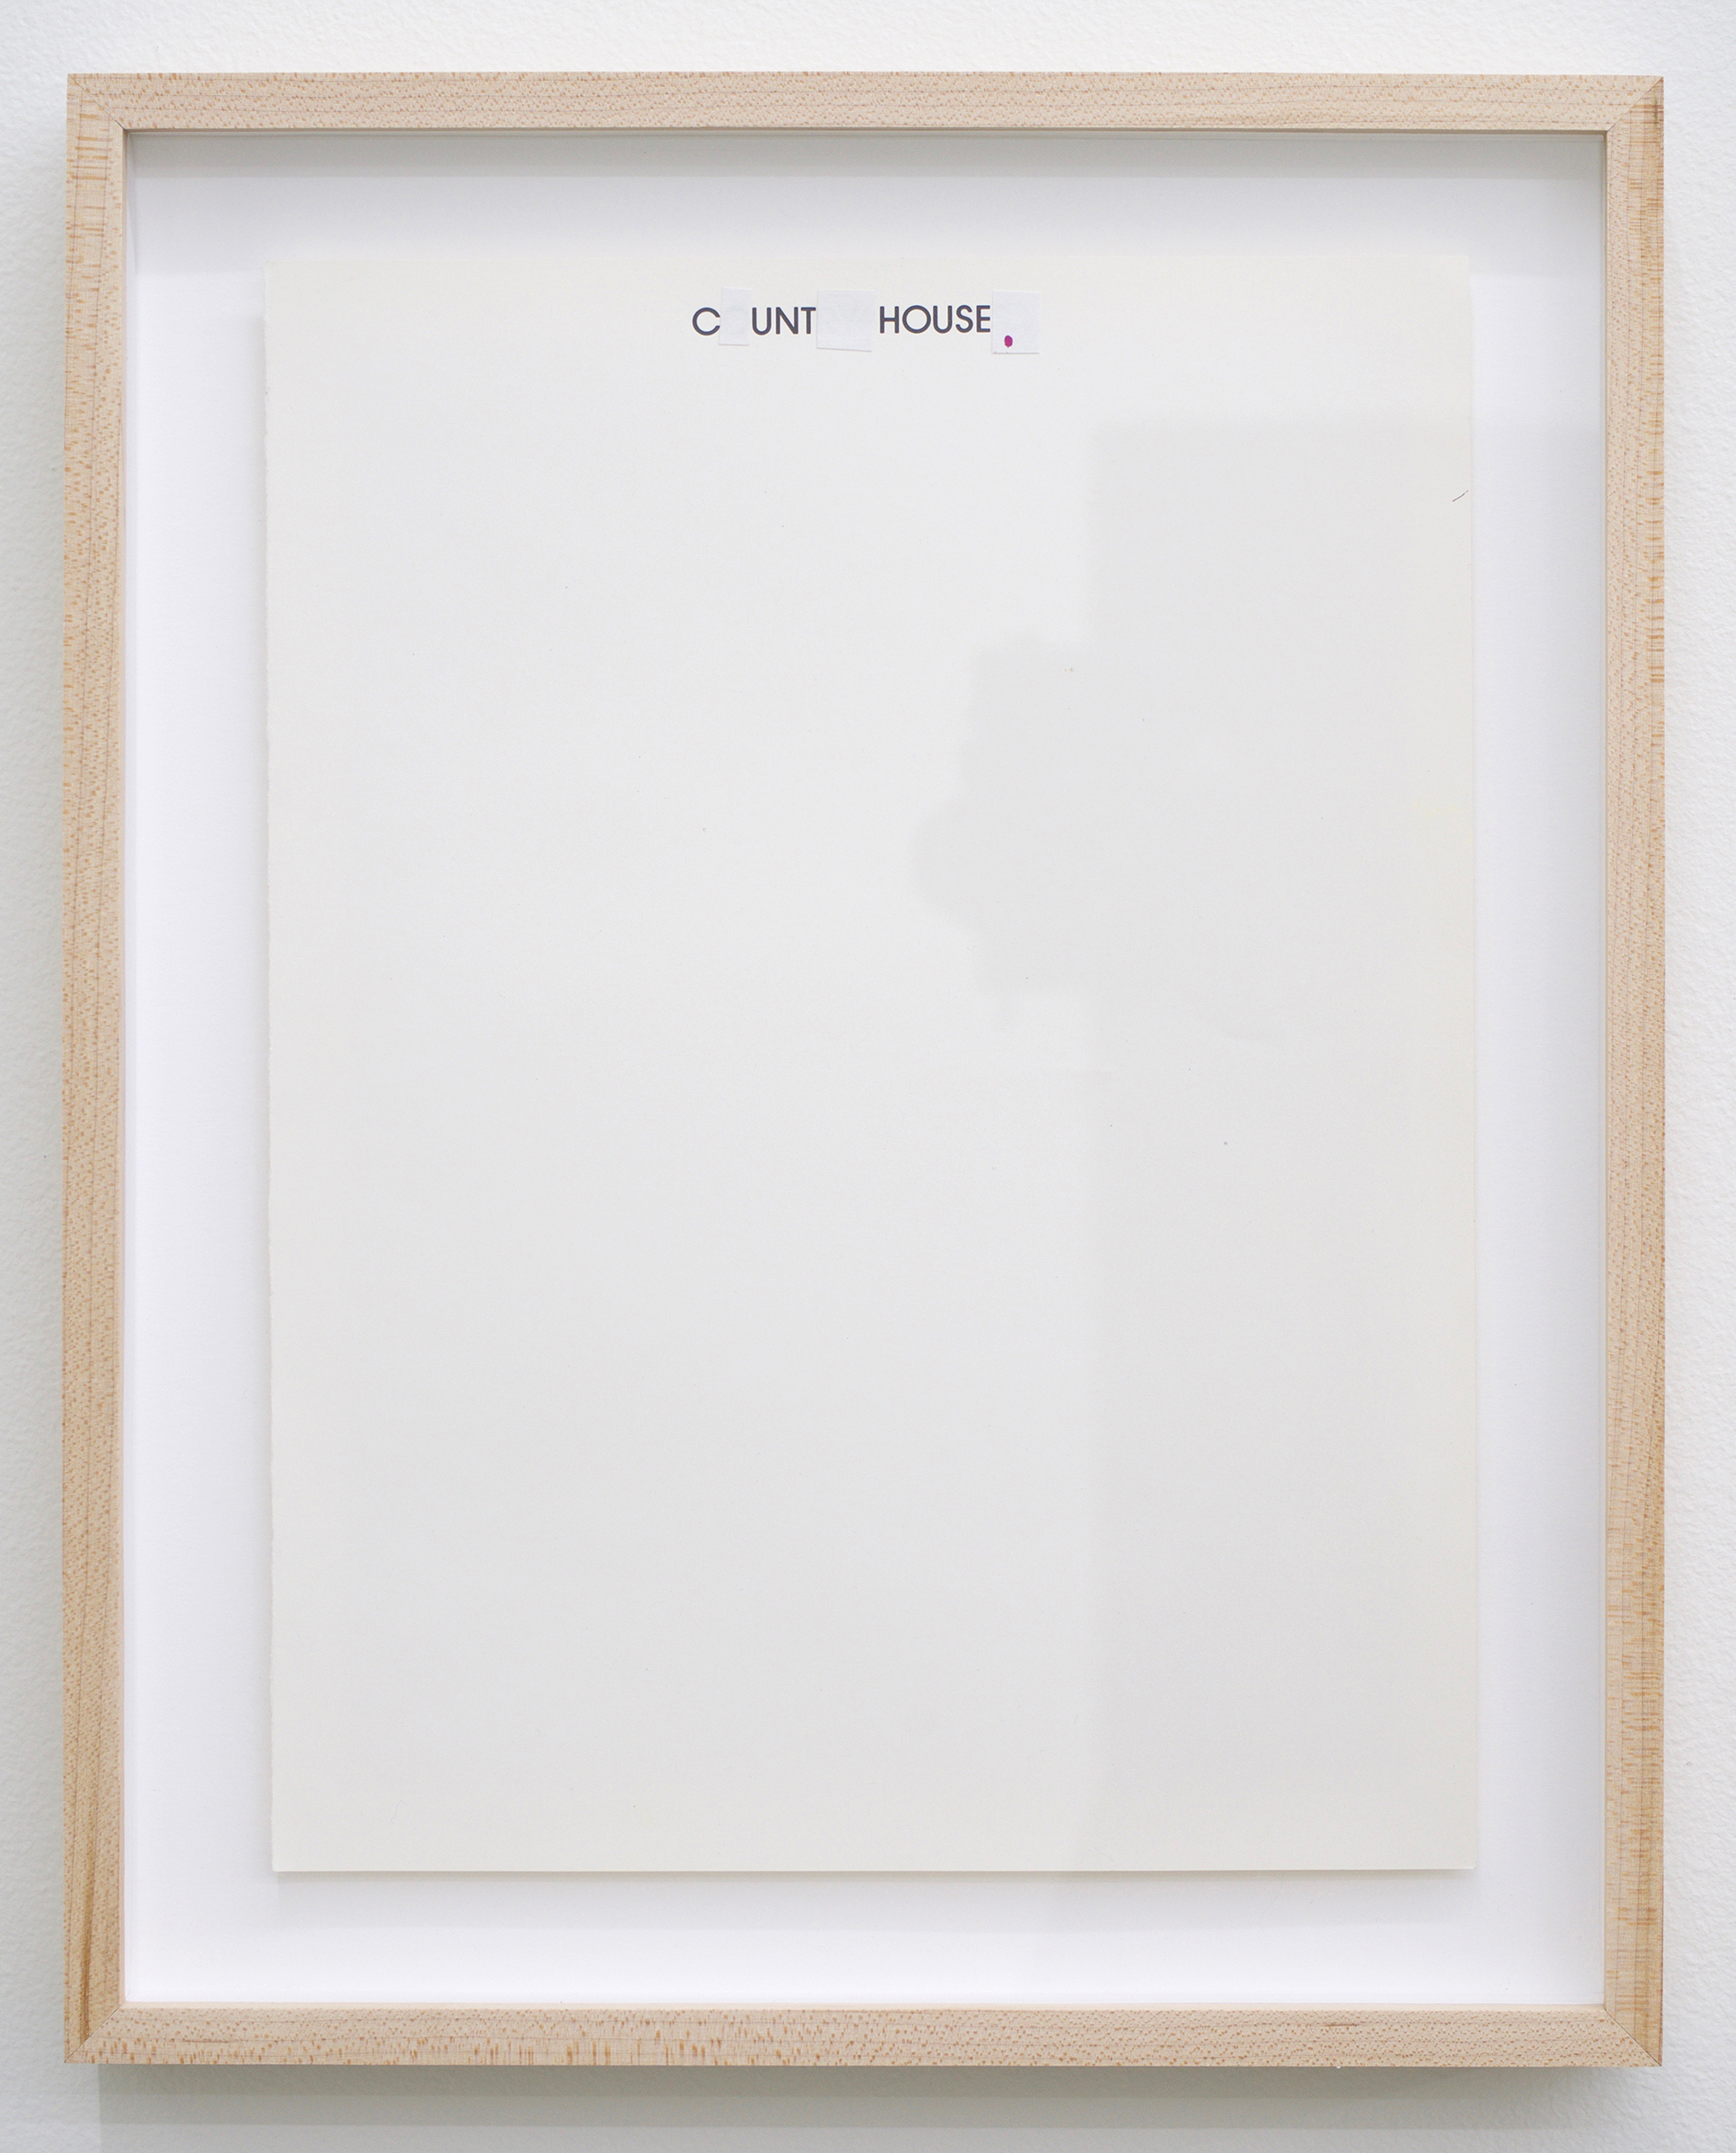  AMANDA CURRERI C_unt__ House_, 2018 Altered book page, custom frame, 13.5” x 10.75” 